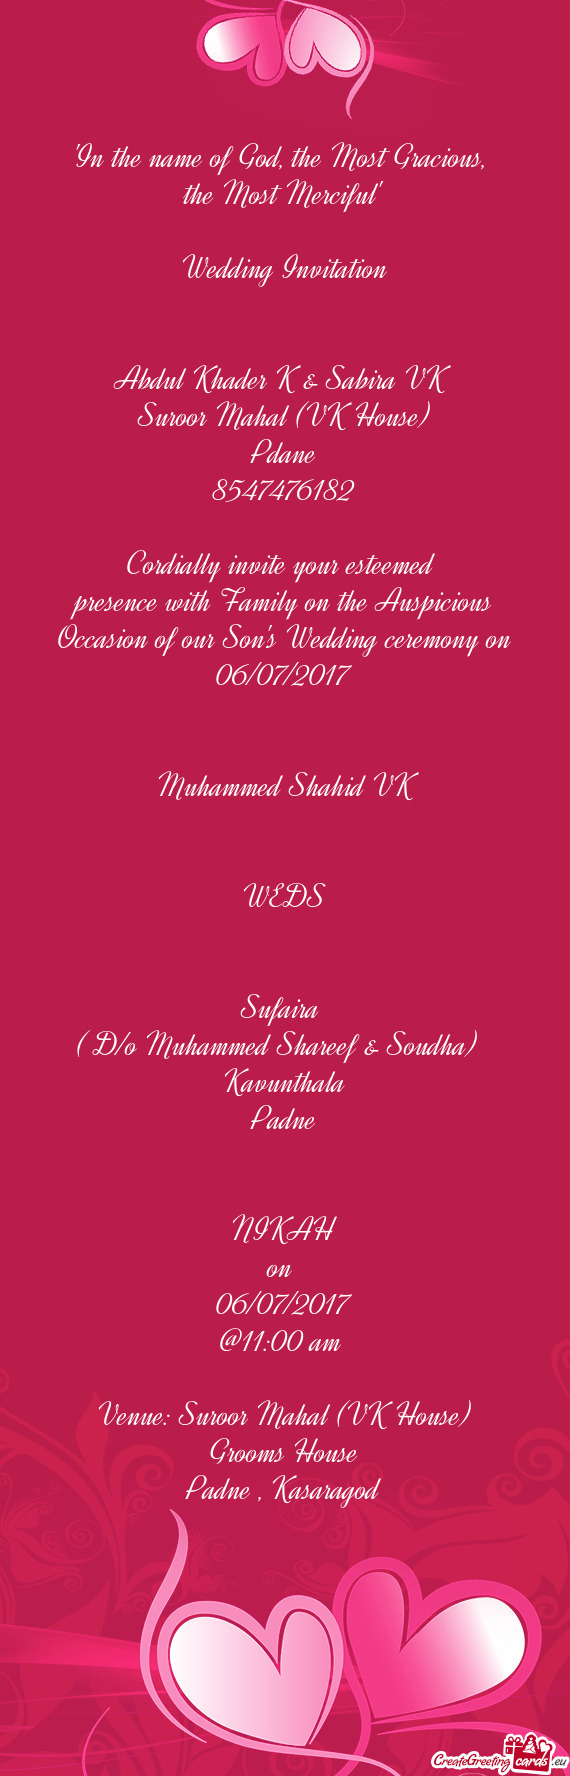 The Most Merciful"
 
 Wedding Invitation
 
 
 Abdul Khader K & Sabira VK 
 Suroor Mahal (VK House